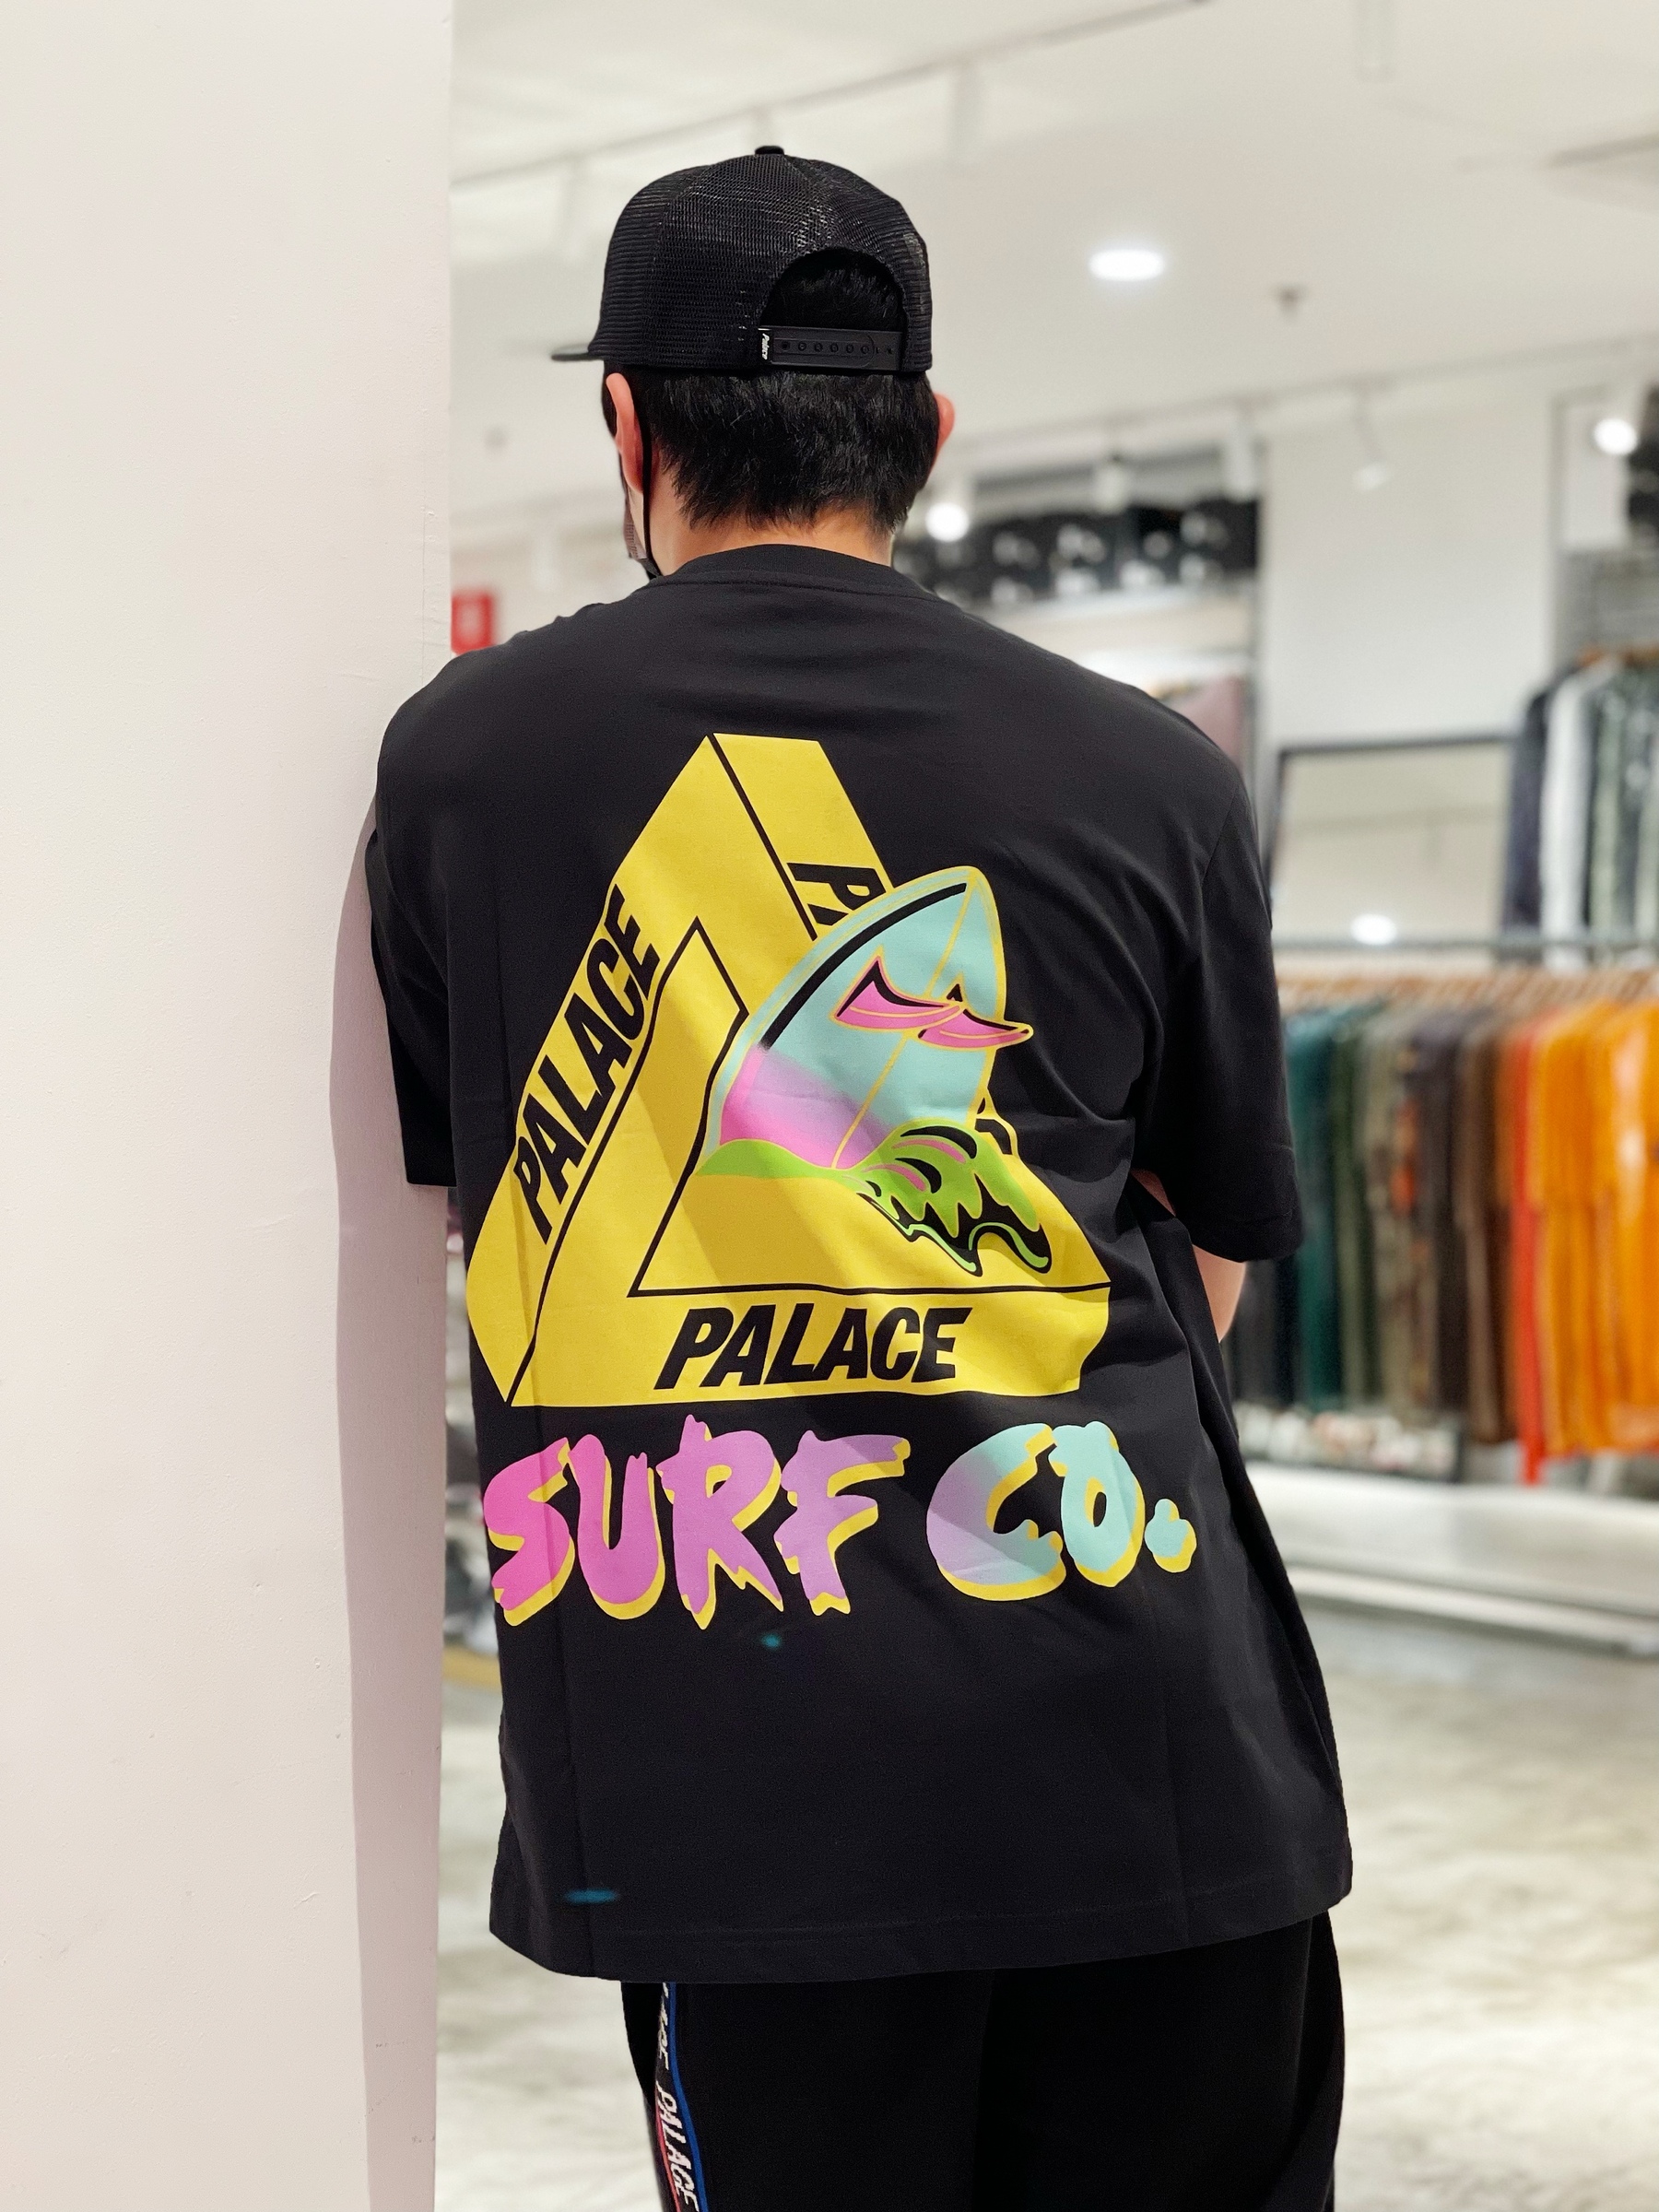 PALACE TRI-SURF CO T-SHIRT - BLACK